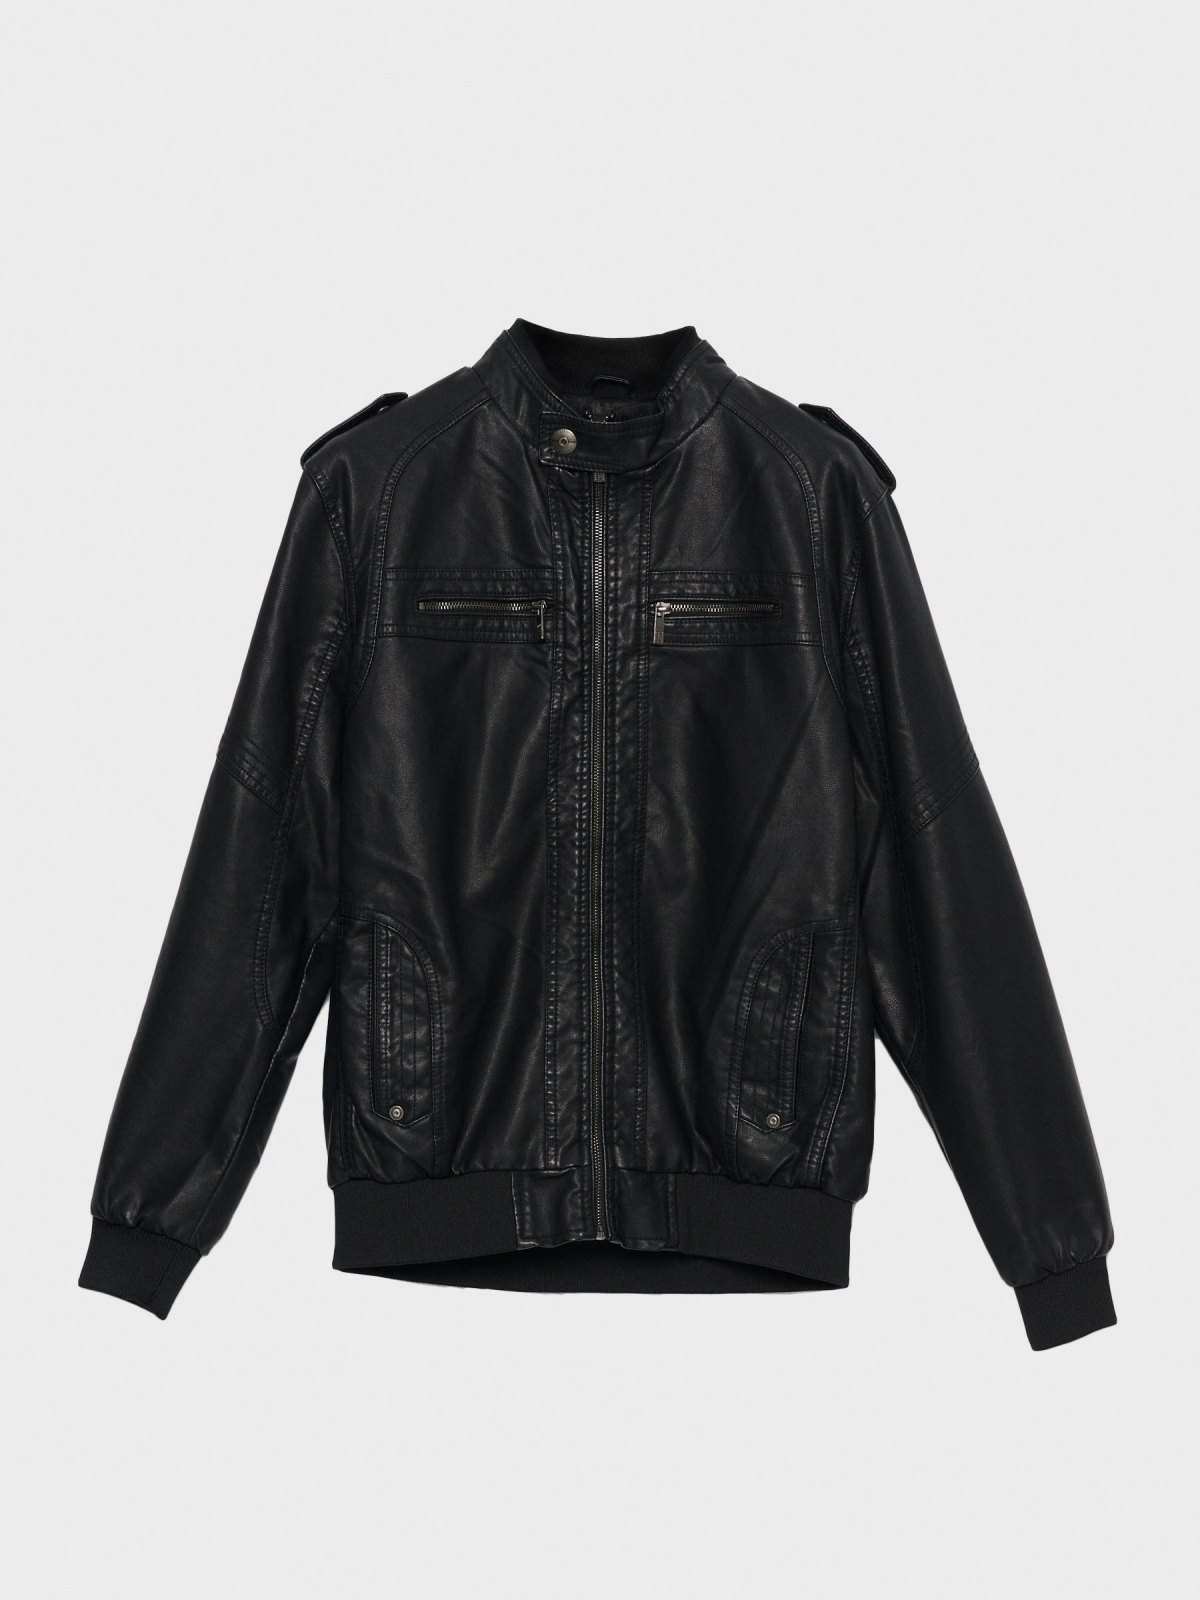  Black leather effect jacket black